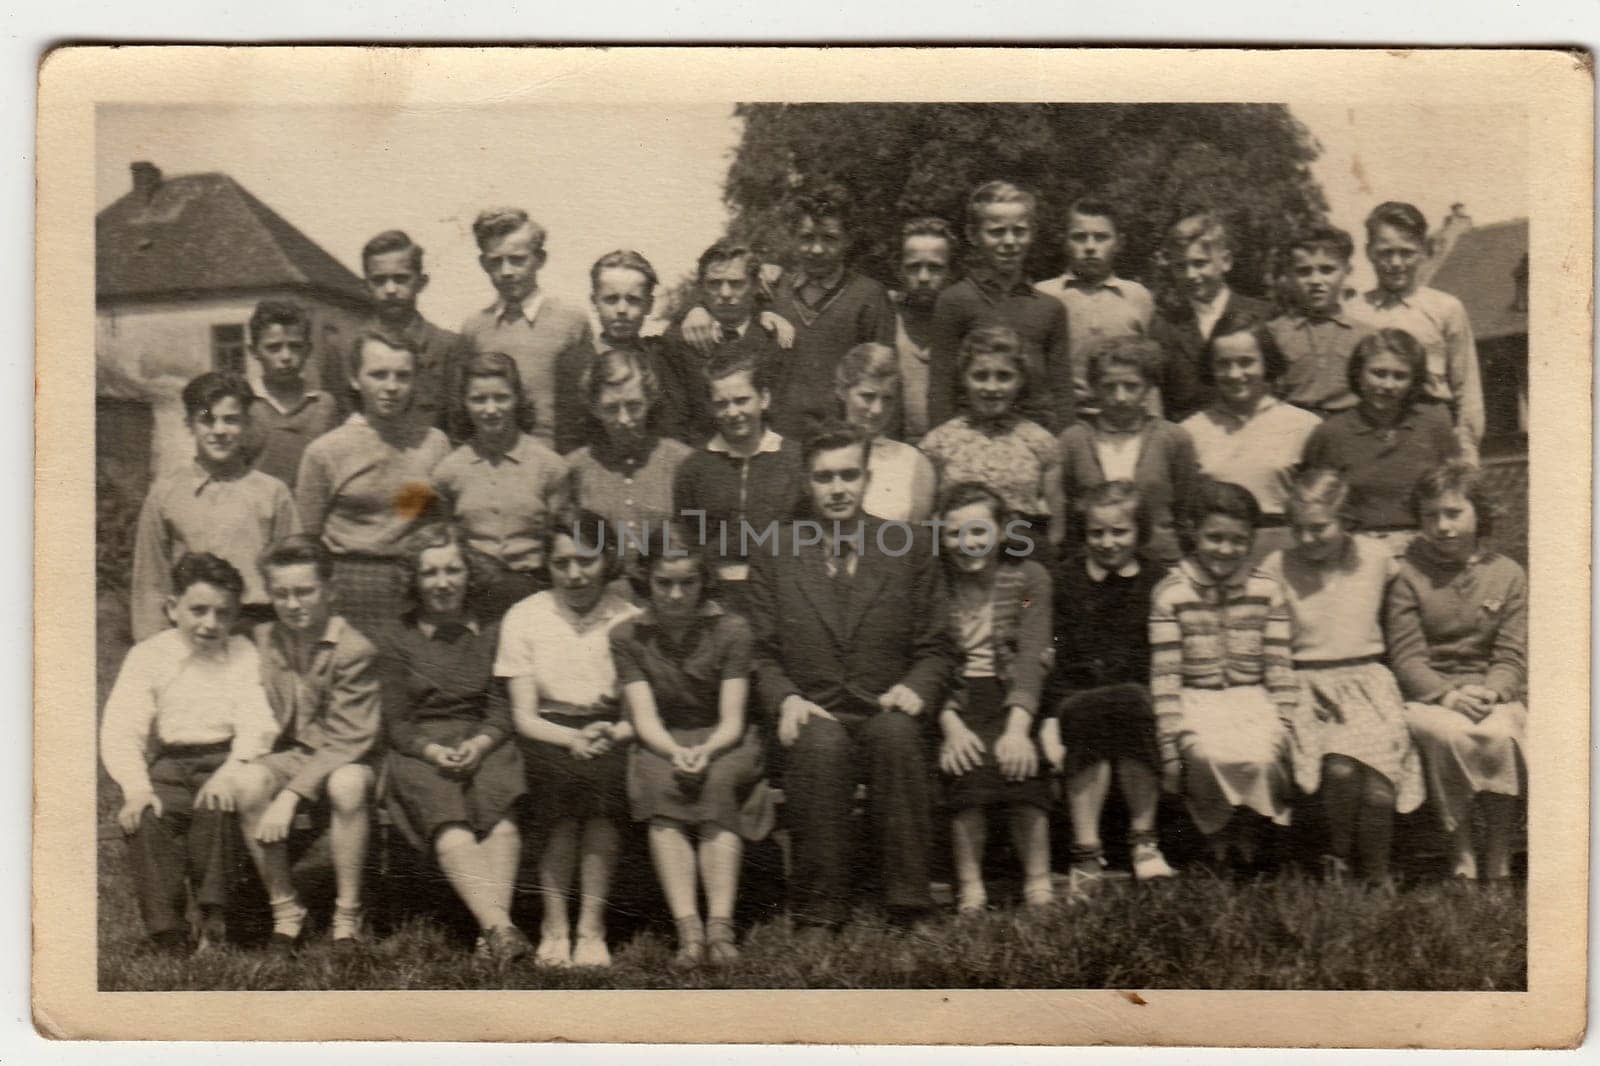 THE CZECHOSLOVAK SOCIALIST REPUBLIC - CIRCA 1960: A vintage photo shows schoolmates with male teacher.